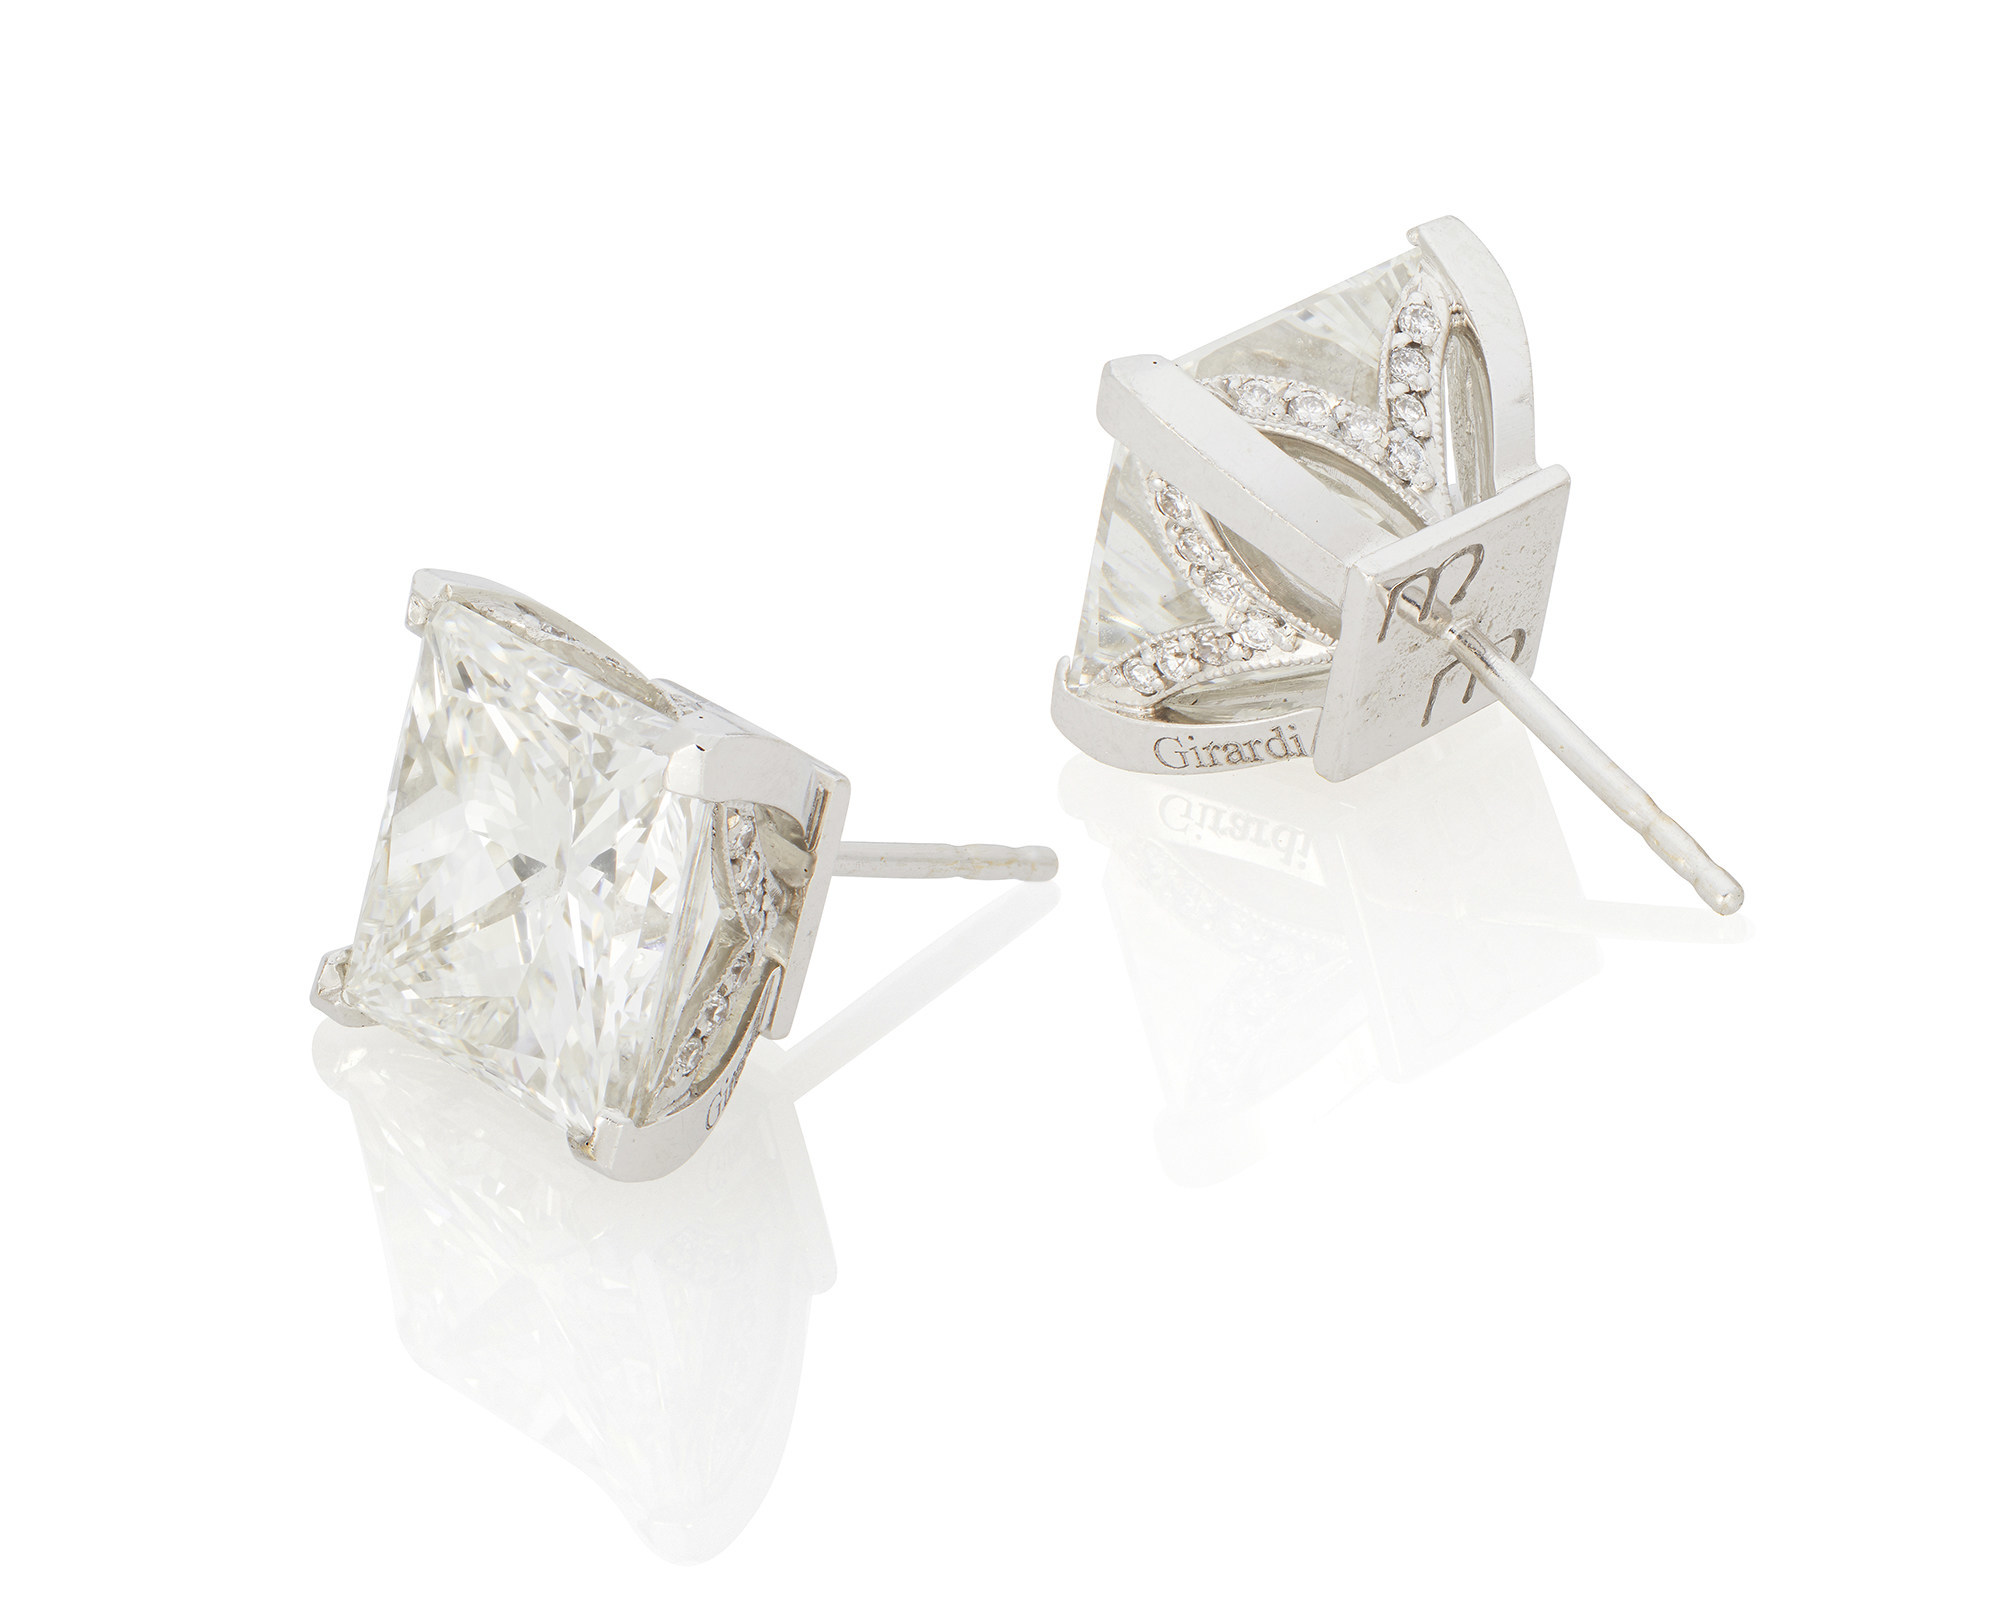 Erika Jayne's Diamond Earrings Headline Moran's Fine Jewelry and Timepieces Sale